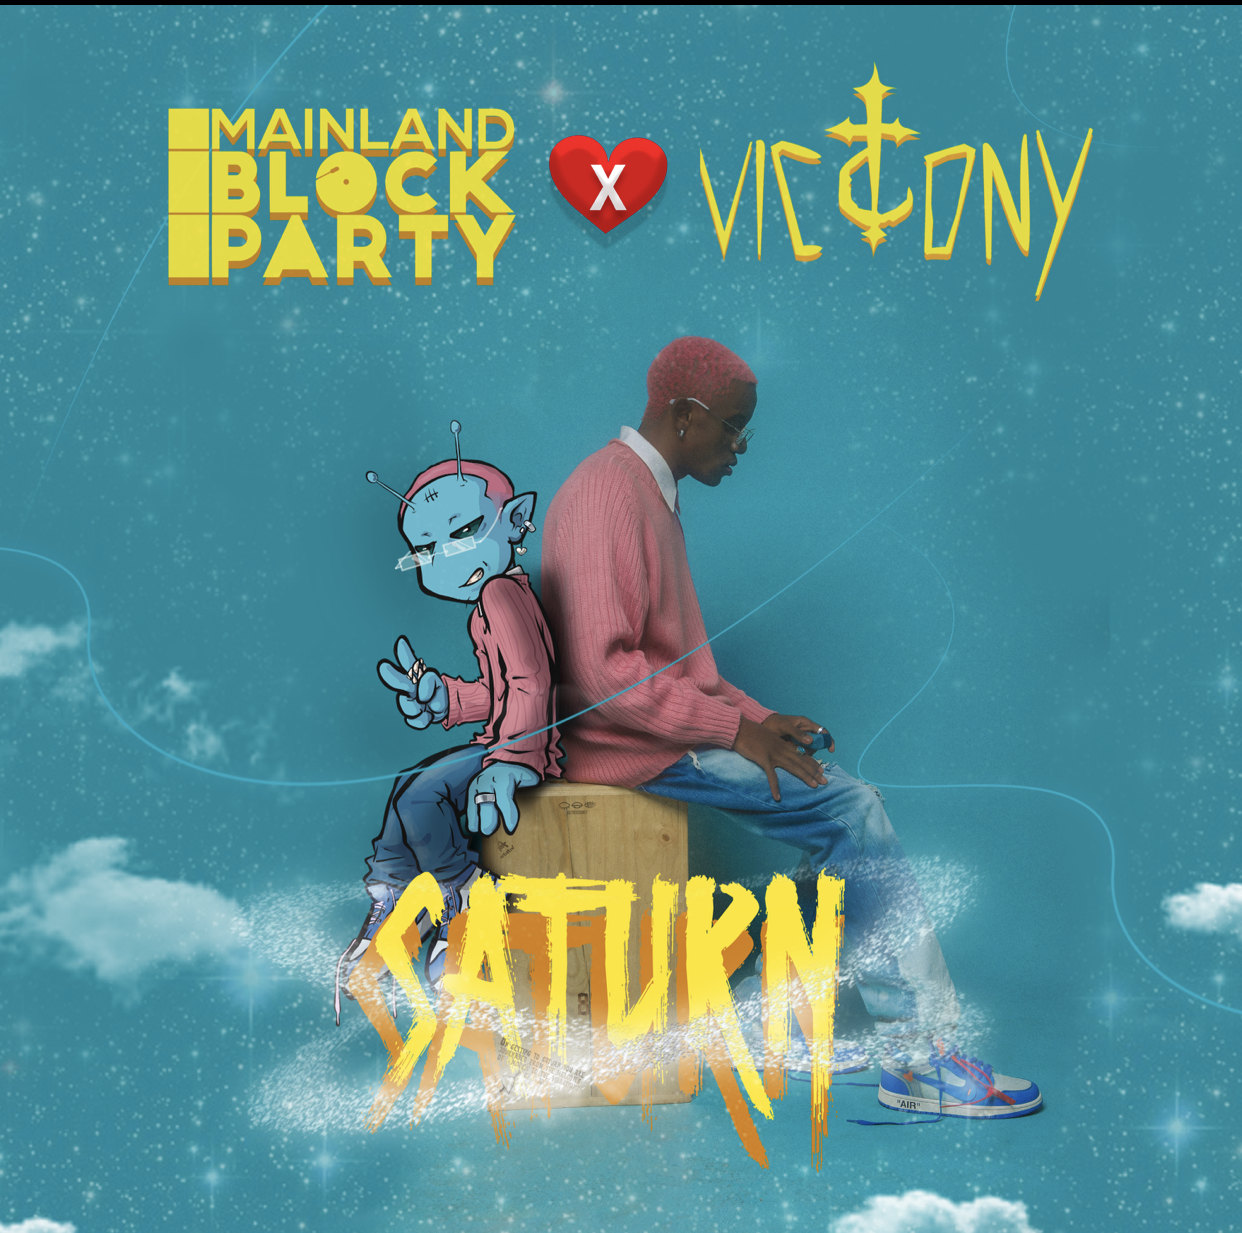 New EP: Victony & MainlandBlockParty - Saturn | BellaNaija